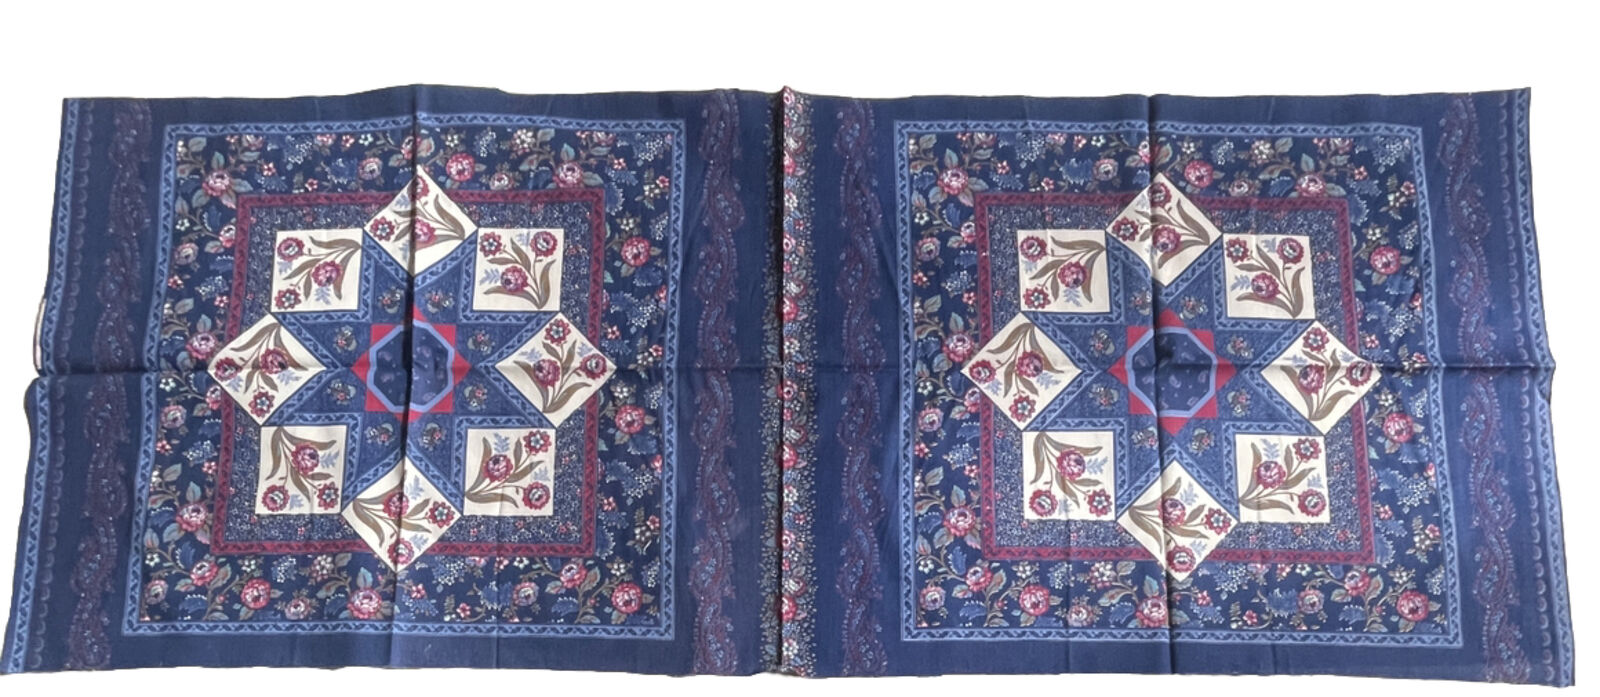 Two Vtg Cotton Fabric Indigo Blue Pink Floral 17x22” Pillow Panels Cottagecore